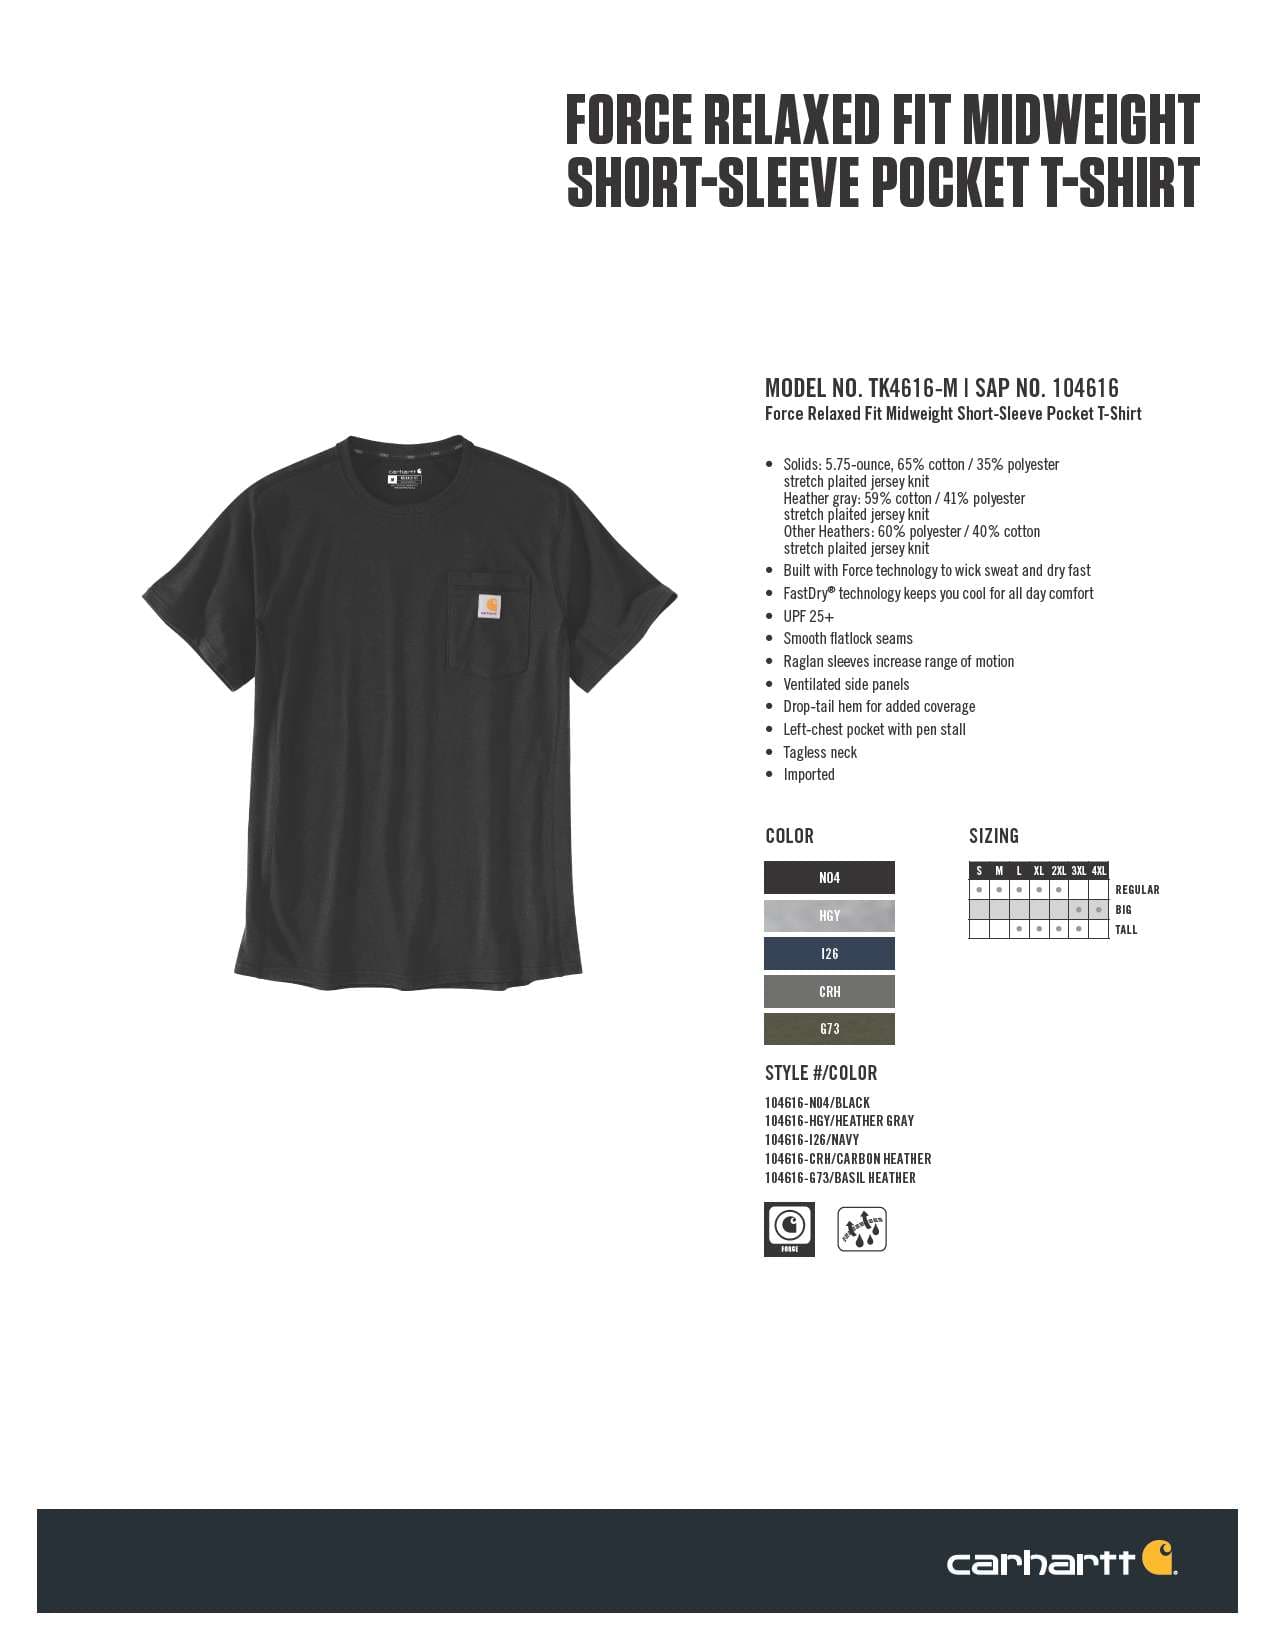 Carhartt Men's Force Cotton Delmont Short-Sleeve T-Shirt - Heather Gray,4XL